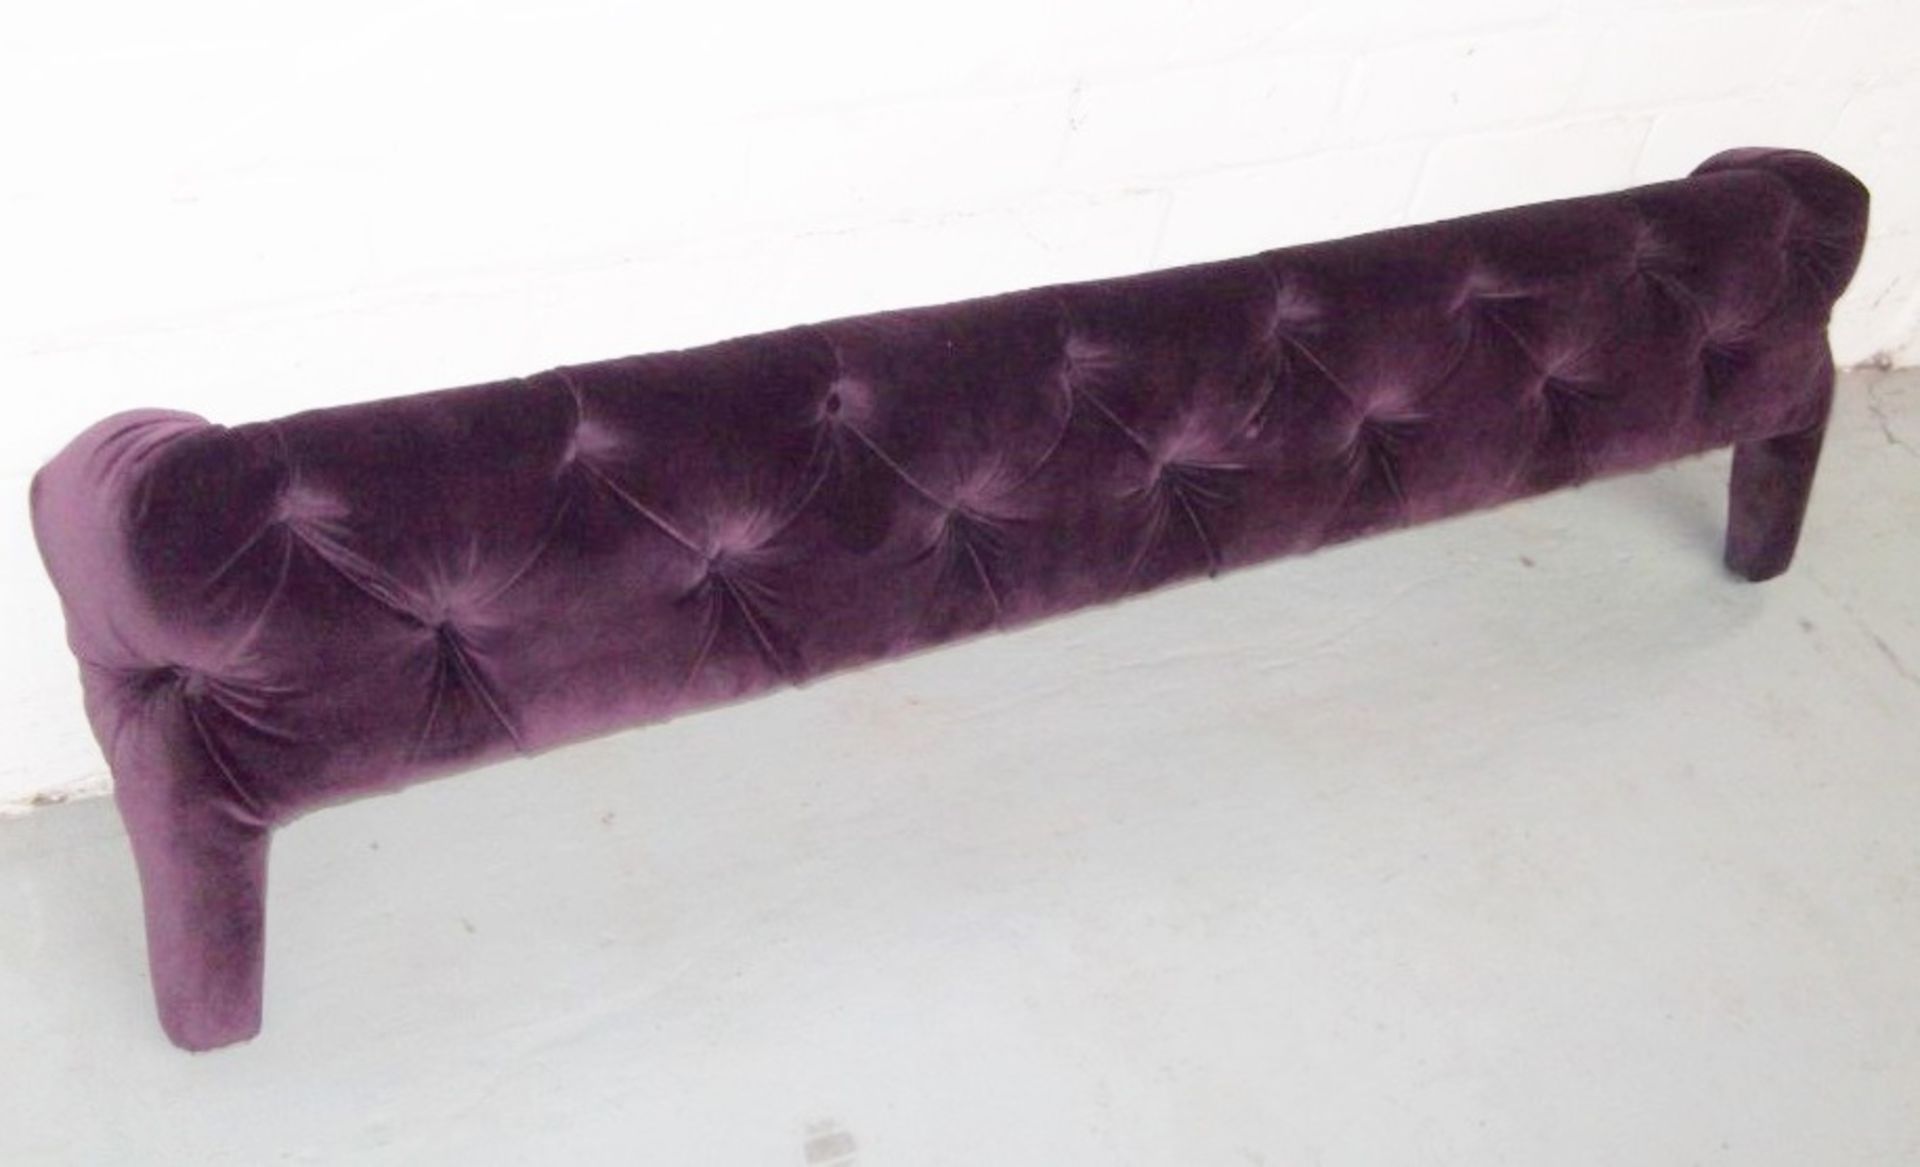 1 x Arketipo Windsor Dream Bed - 245x140cm (Custom Size - Please Read Description) - Upholstered - Image 2 of 7